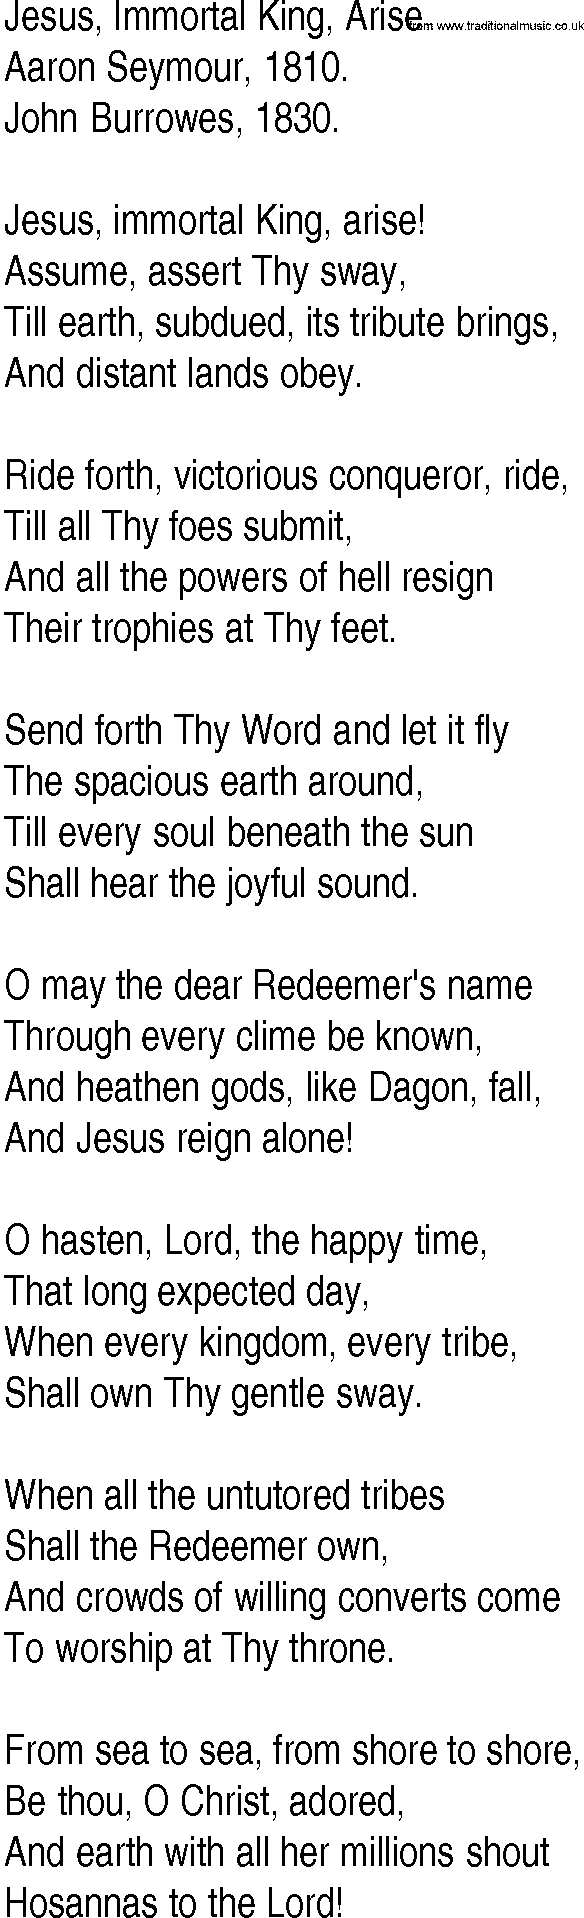 Hymn and Gospel Song: Jesus, Immortal King, Arise by Aaron Seymour lyrics